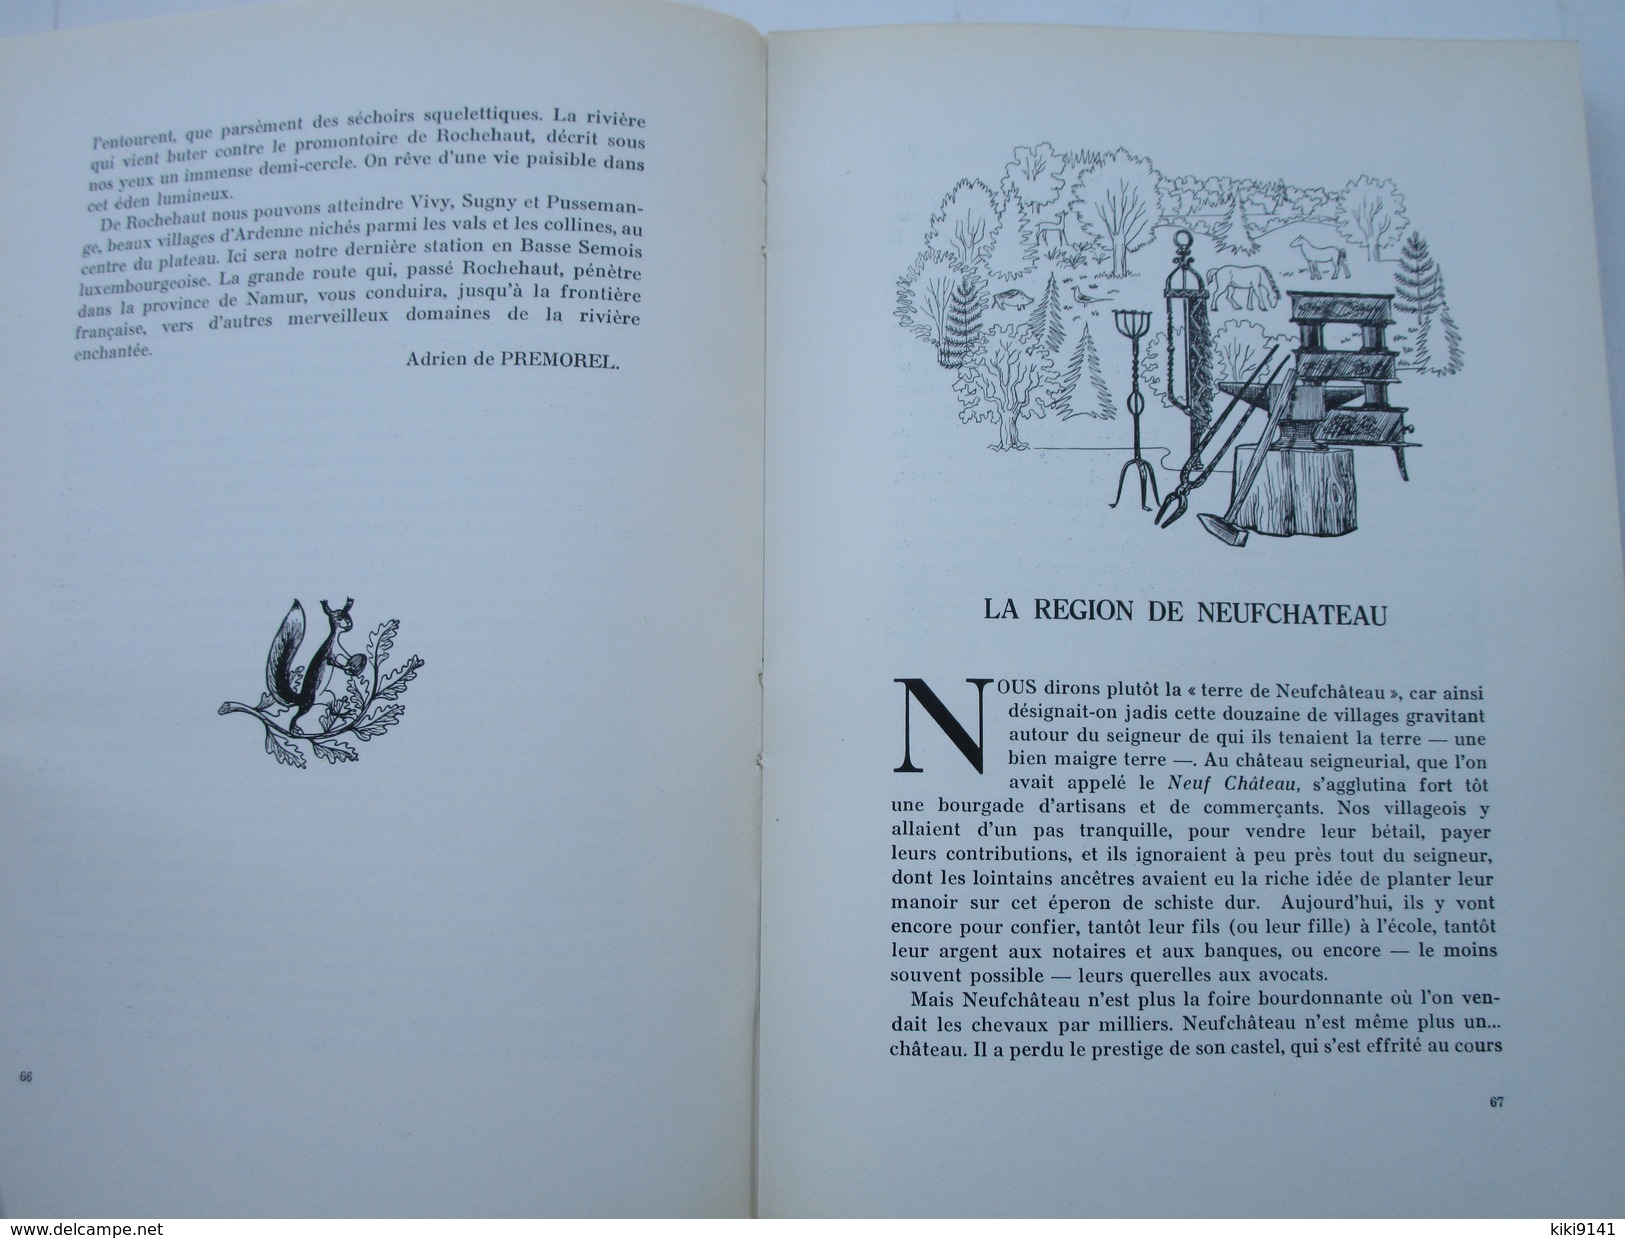 LUXEMBOURG BELGE (240 pages dont 142 illustrations décrites)